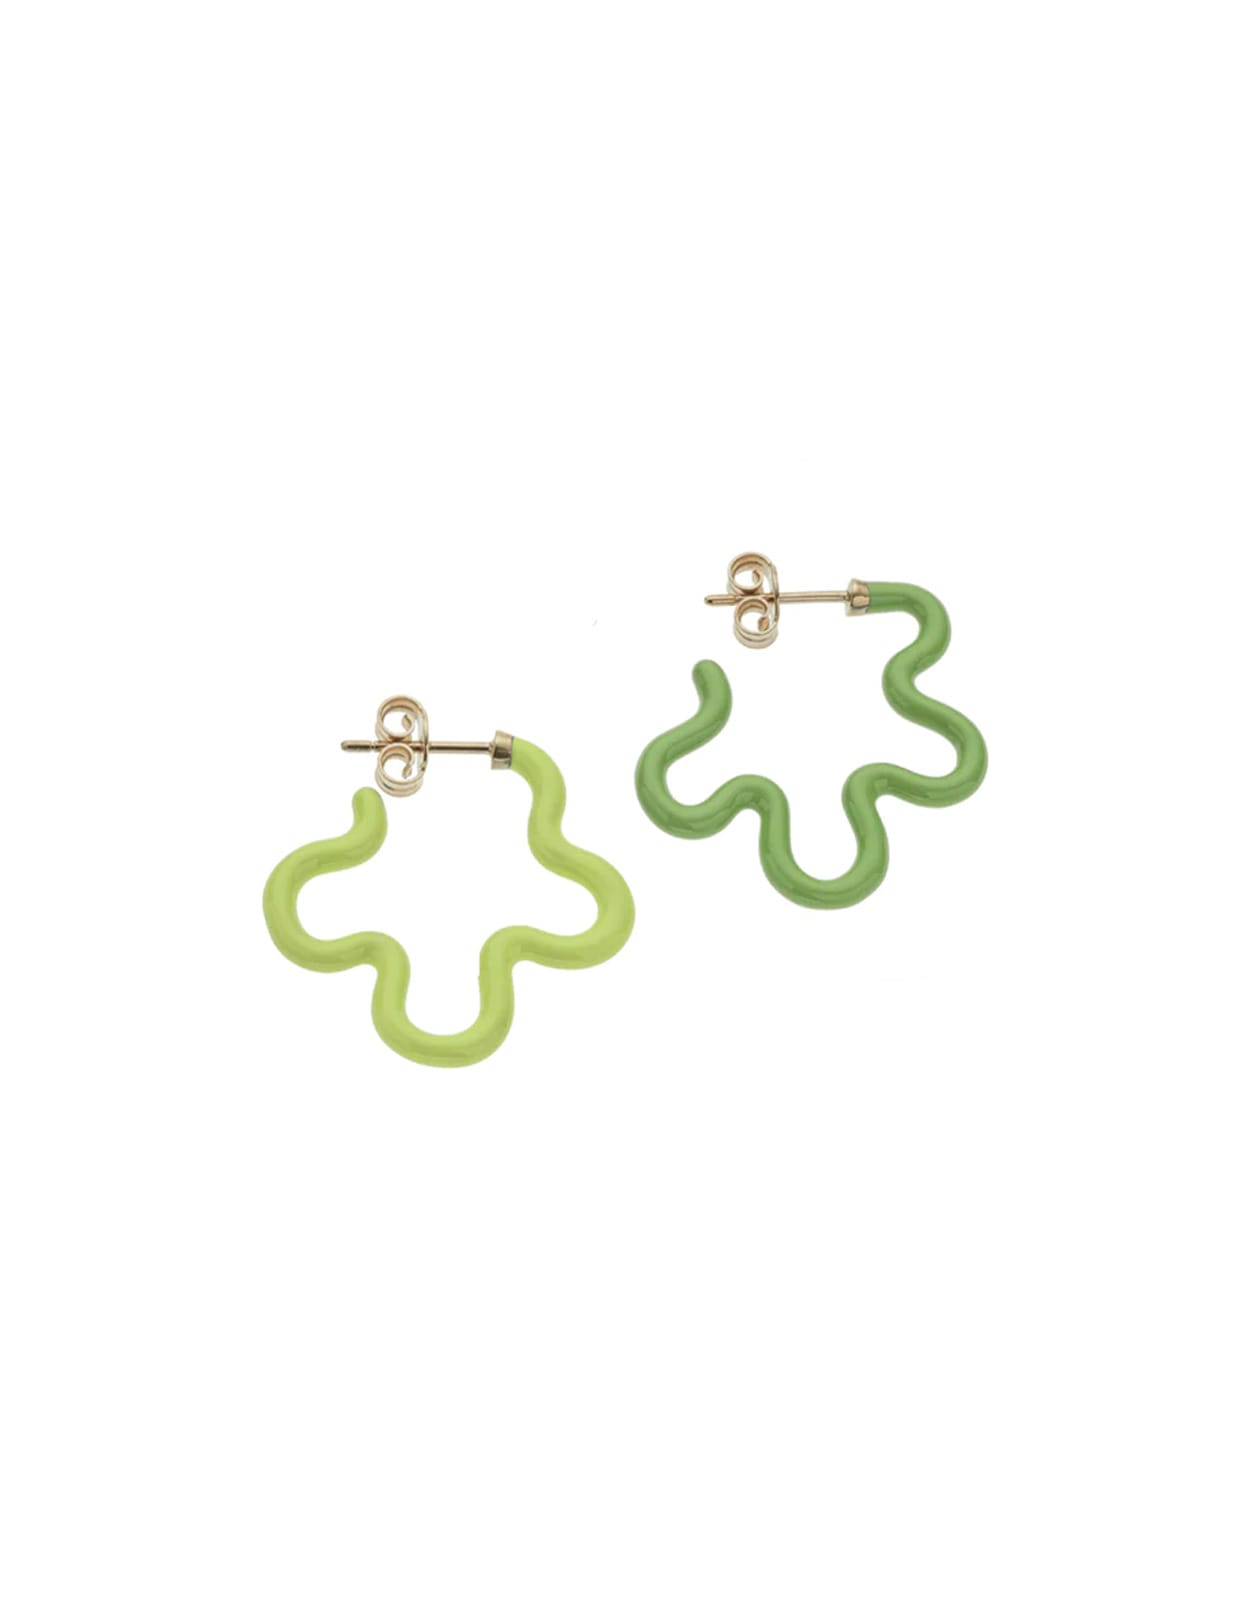 2 Tone Asymmetrical Flower Power Earrings In Lime And Green